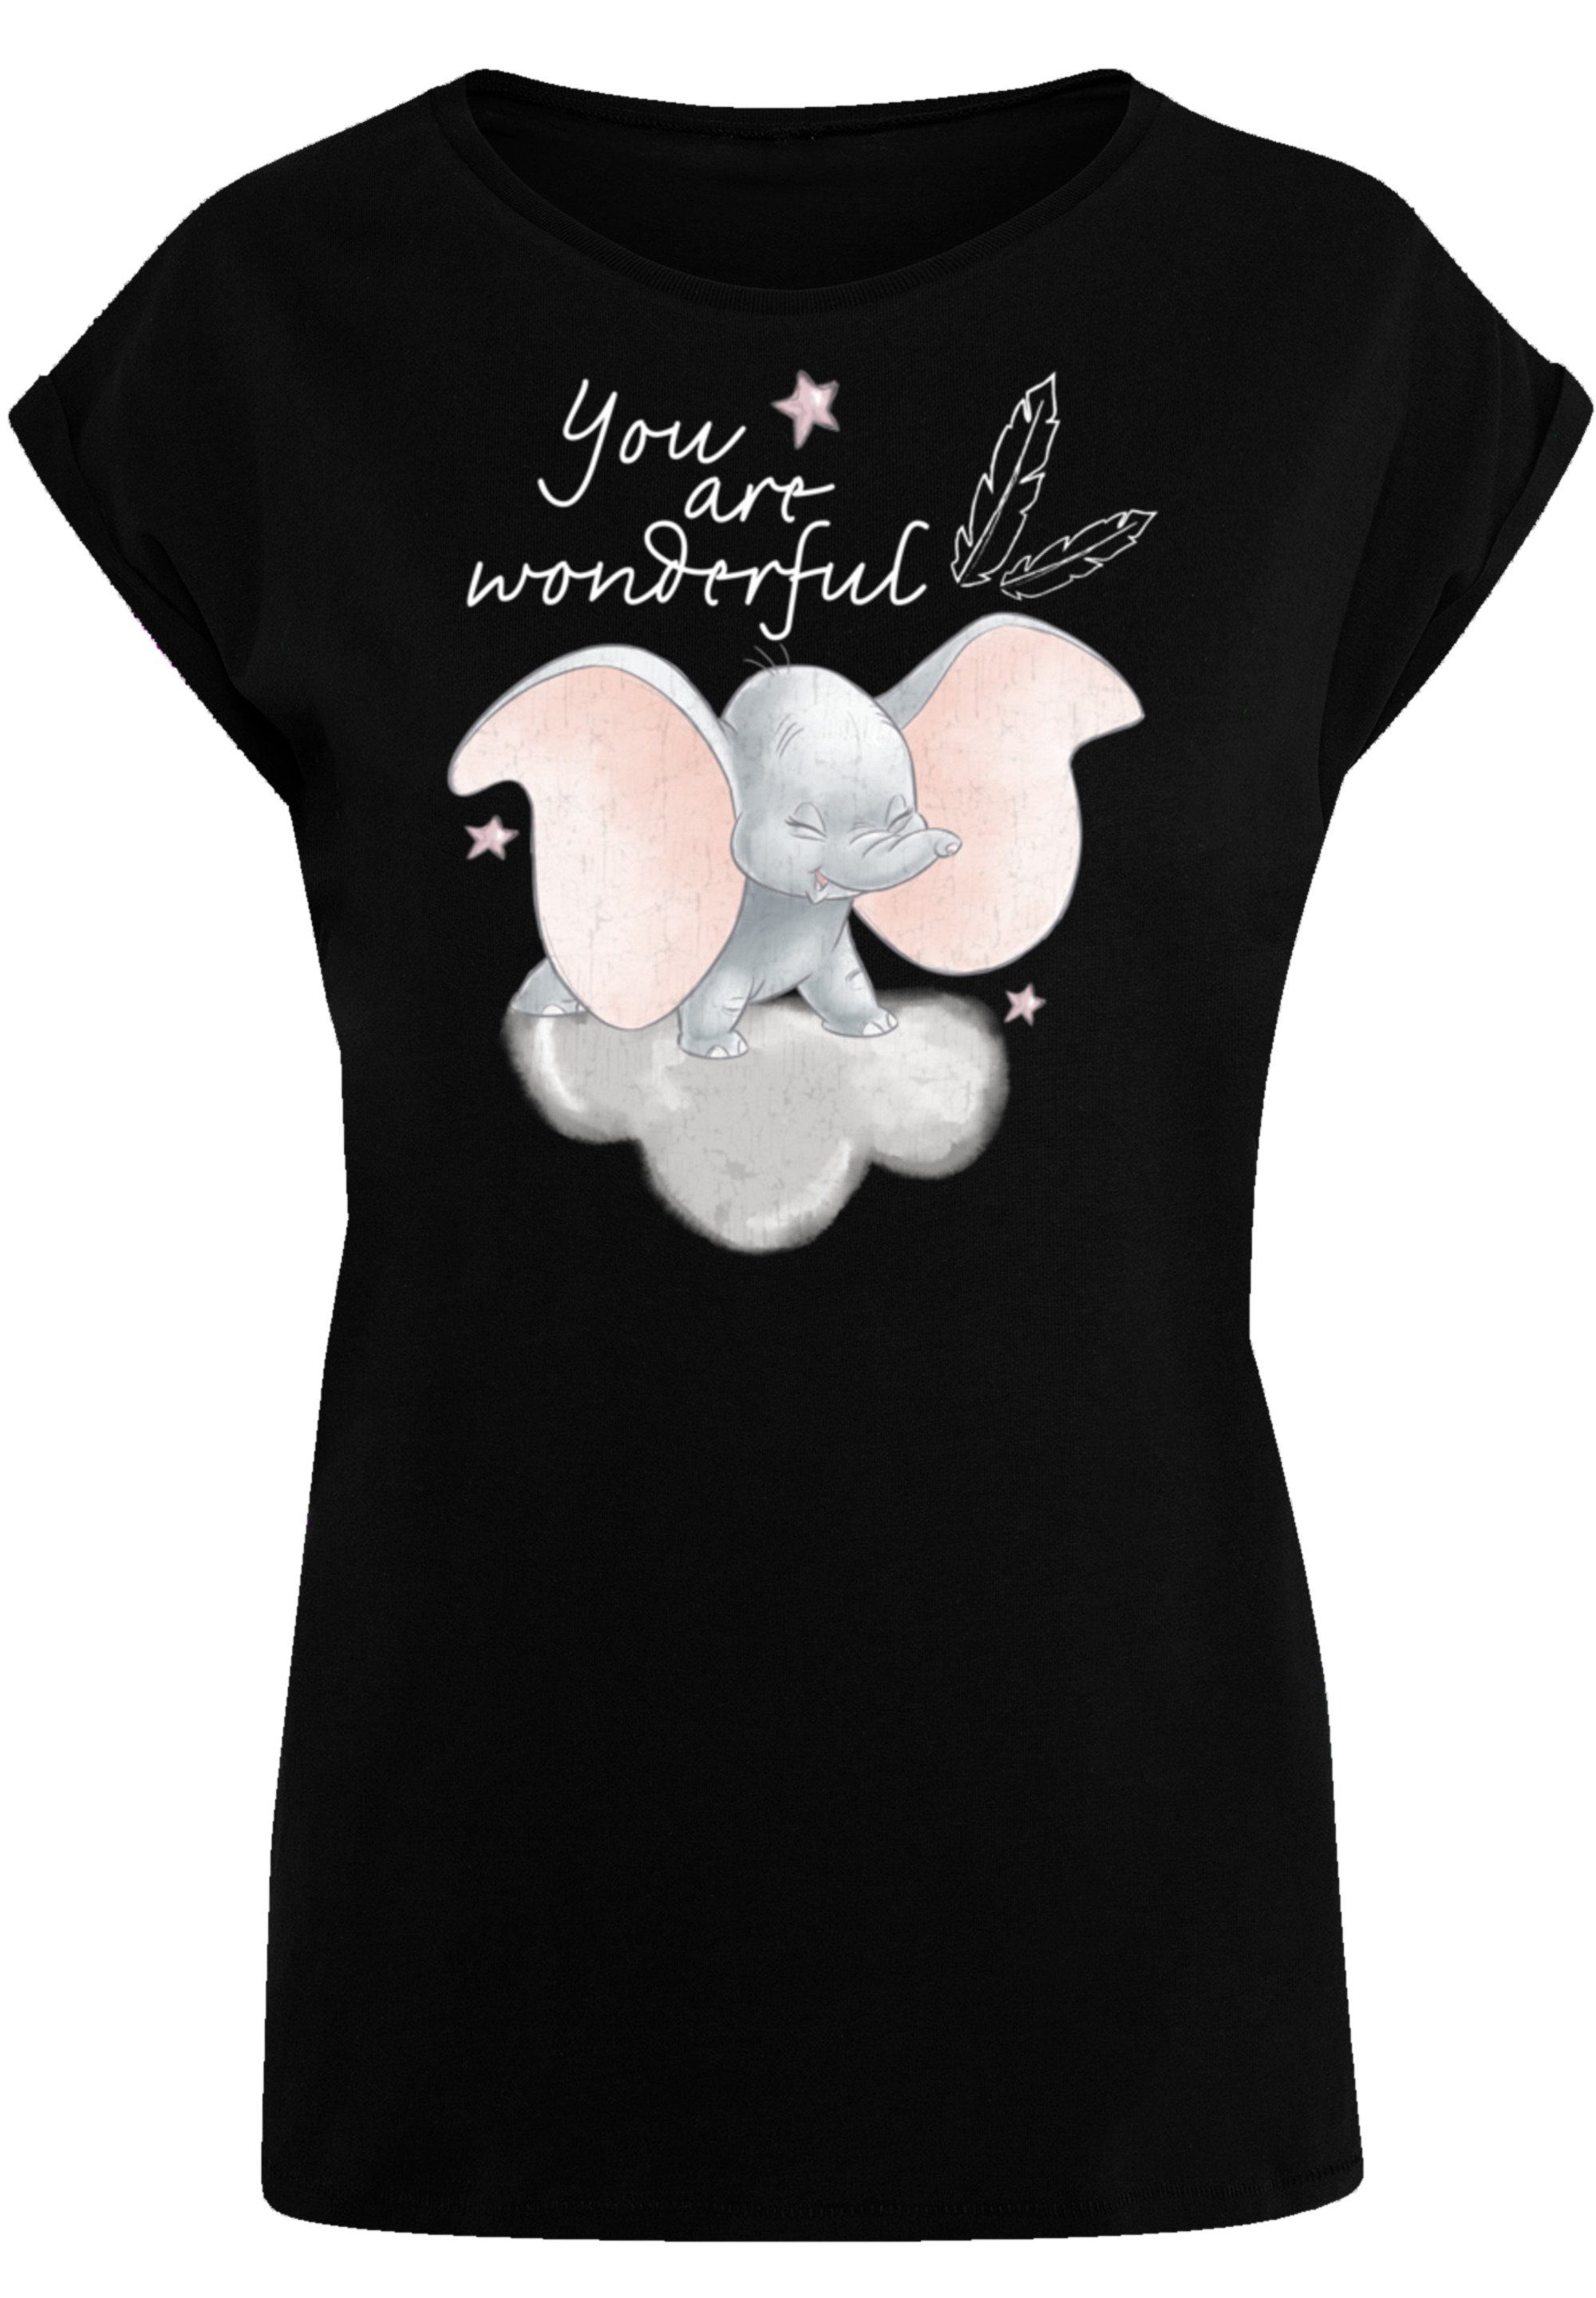 Premium F4NT4STIC You Wonderful Dumbo Are T-Shirt Disney Qualität